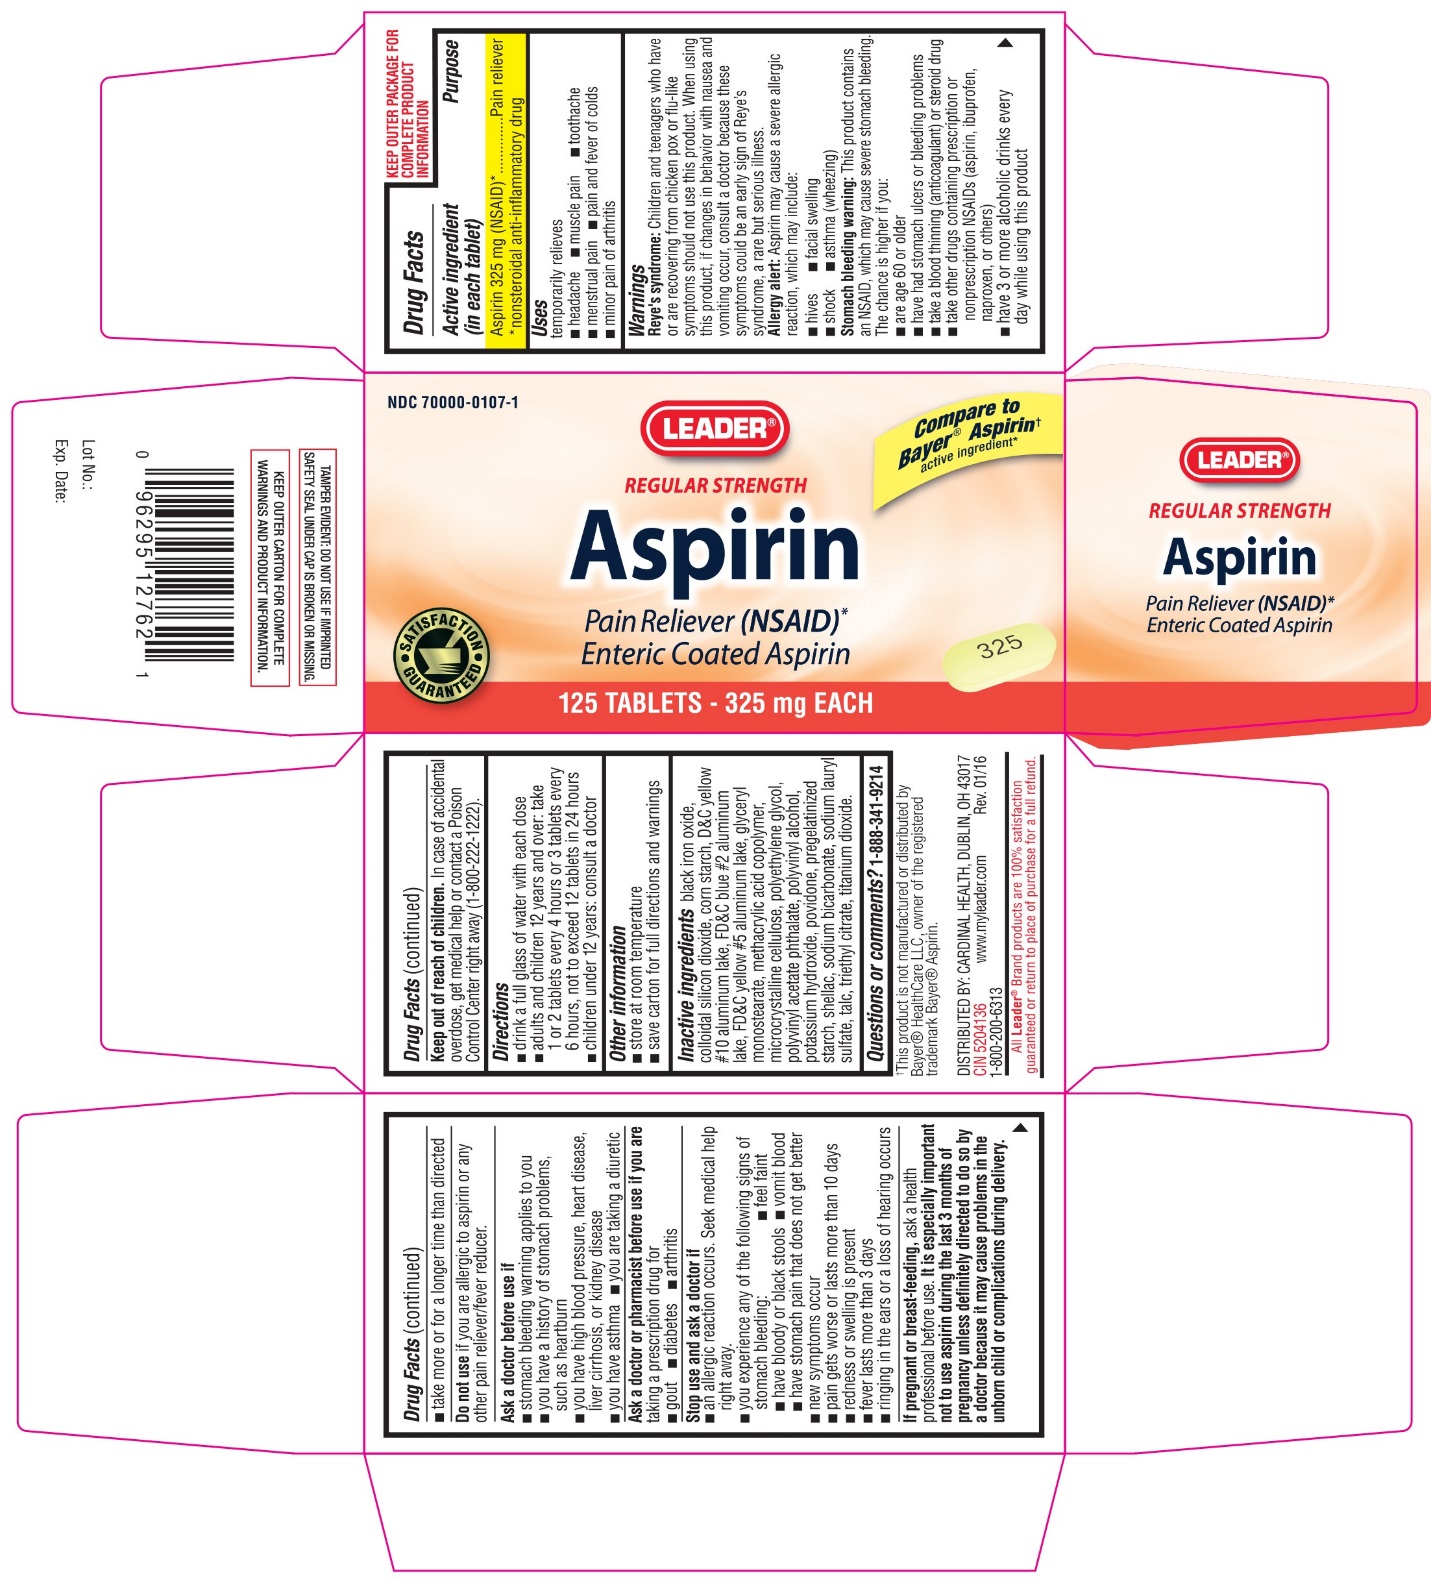 C:\Users\mcraddock\Documents\SPL\Aspirin Enteric Coated 325 mg\Aspirin Enteric Coated 325mg Carton Old Style Guide.jpg